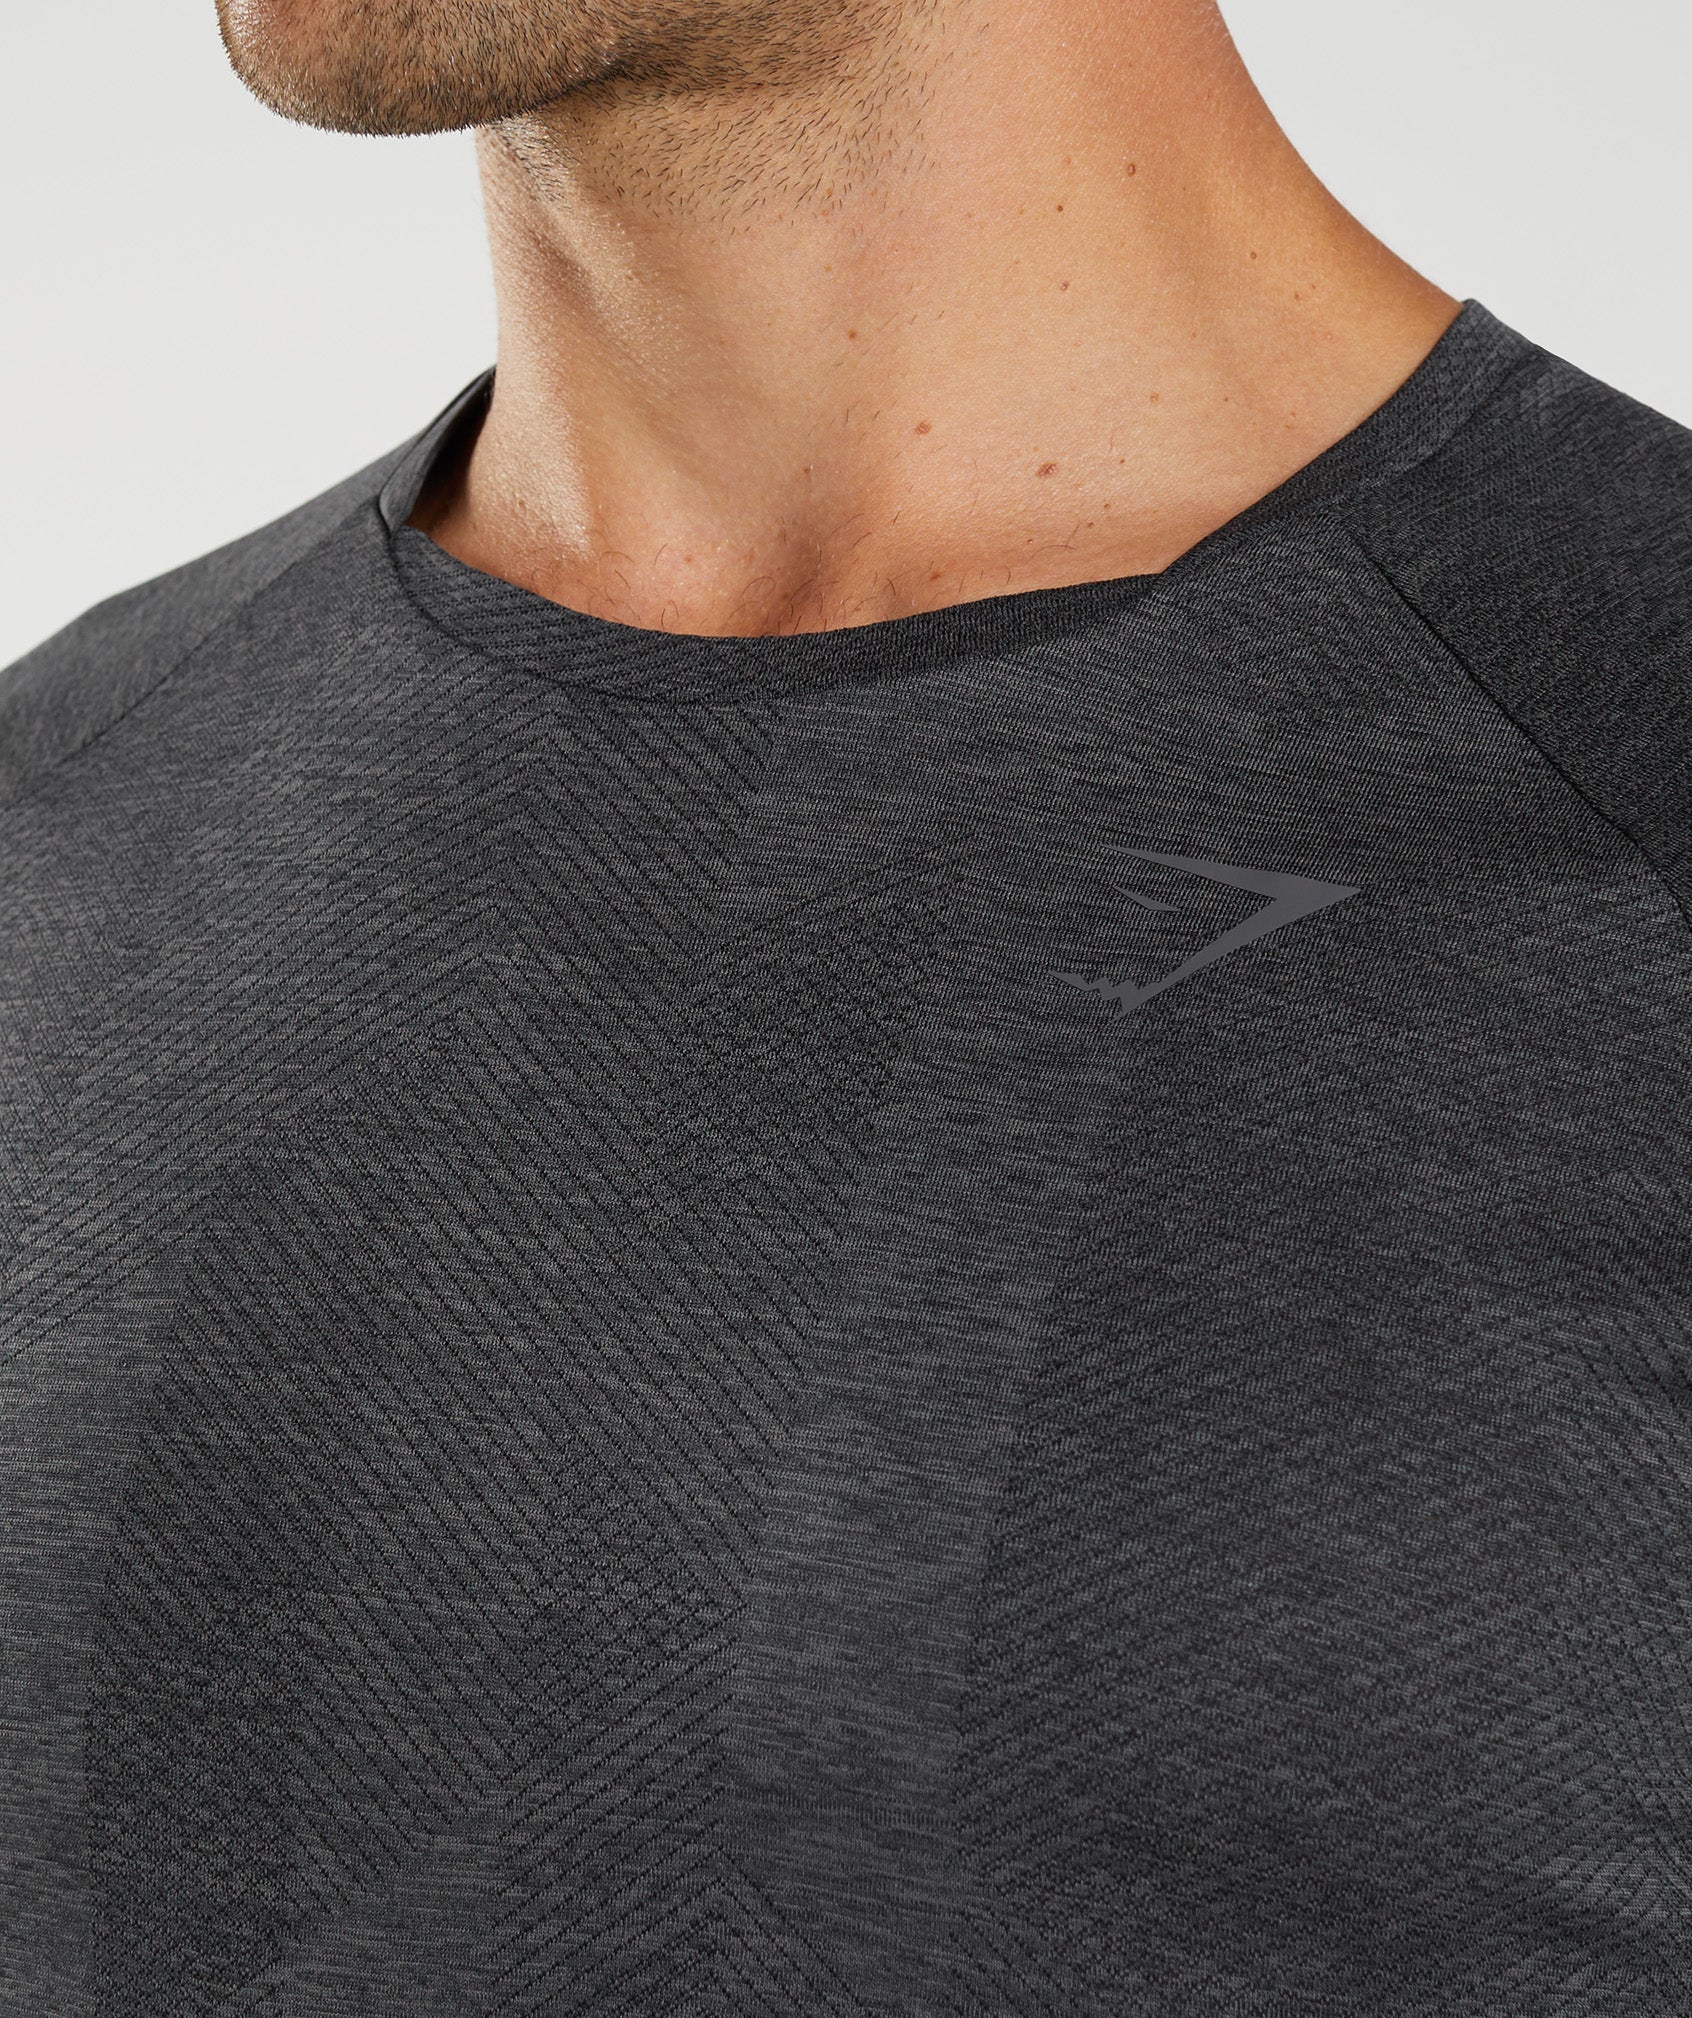 Apex T-Shirt in Black/Silhouette Grey